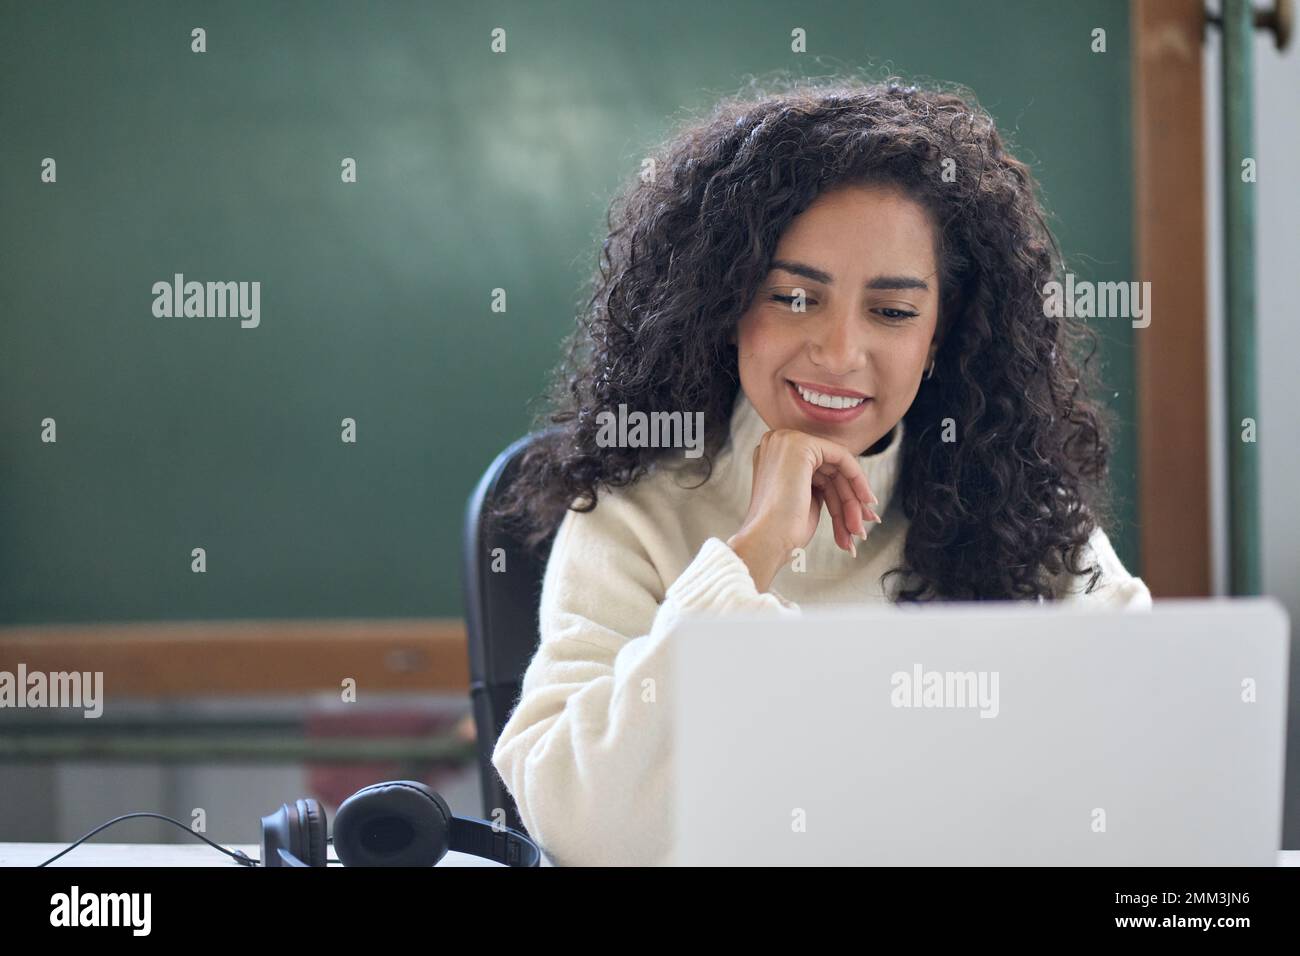 Young woman school teacher, online tutor sitting at desk teaching remote class. Stock Photo